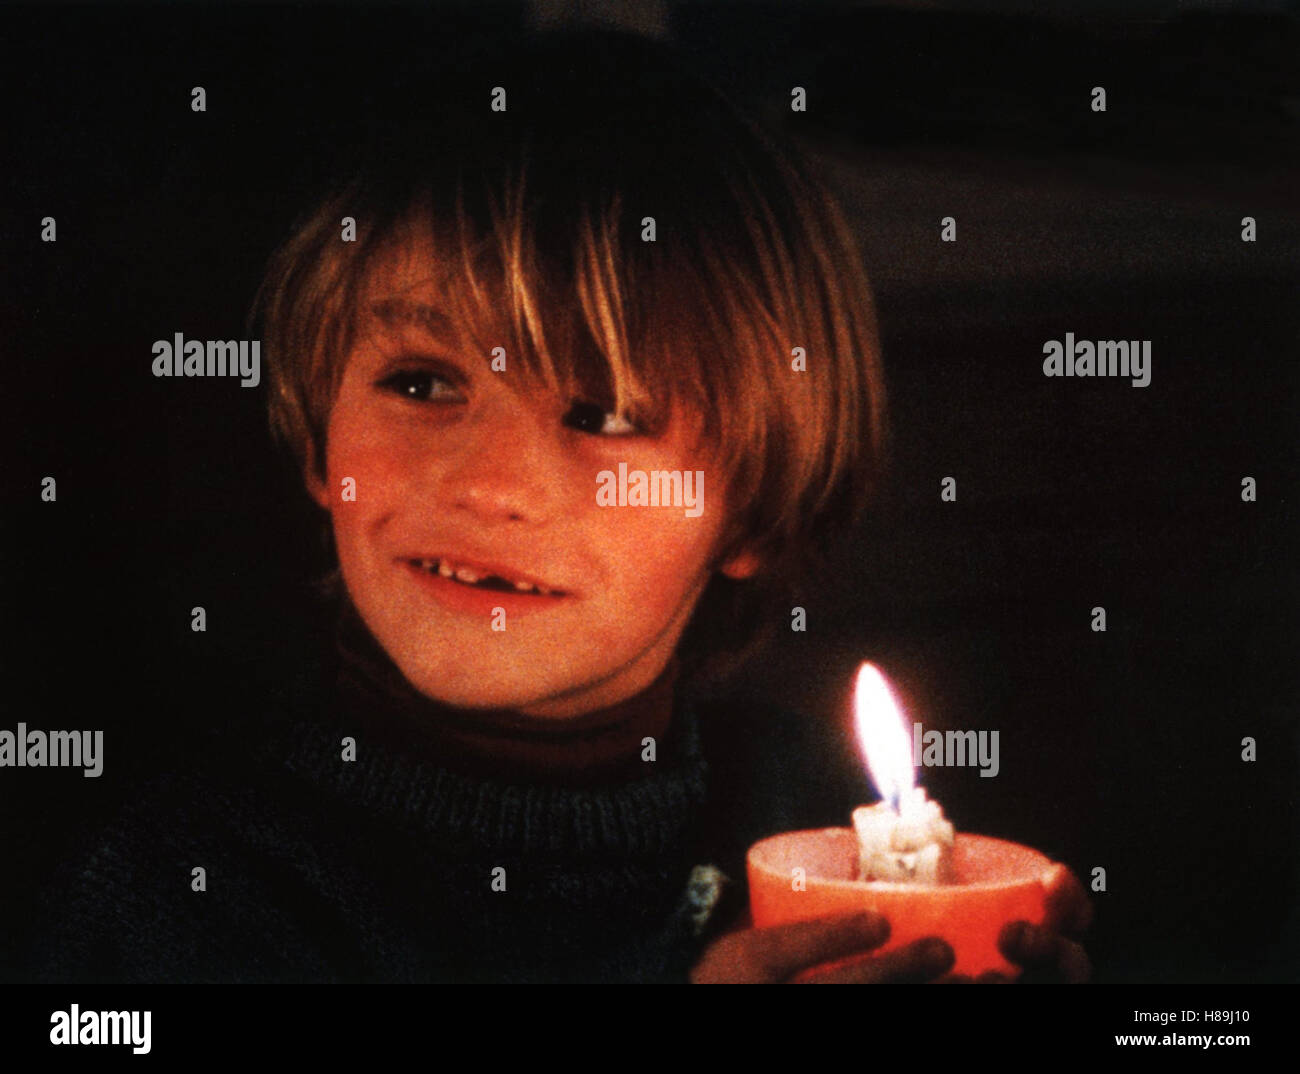 Gibt es zu Weihnachten Schnee?, (Y'AURA-T-IL DE LA NEIGE un NOEL?) F 1996, Regie: Sandrine Veysset, Szene Stichwort: Tipo, Zahnlücke, Kerze Foto de stock